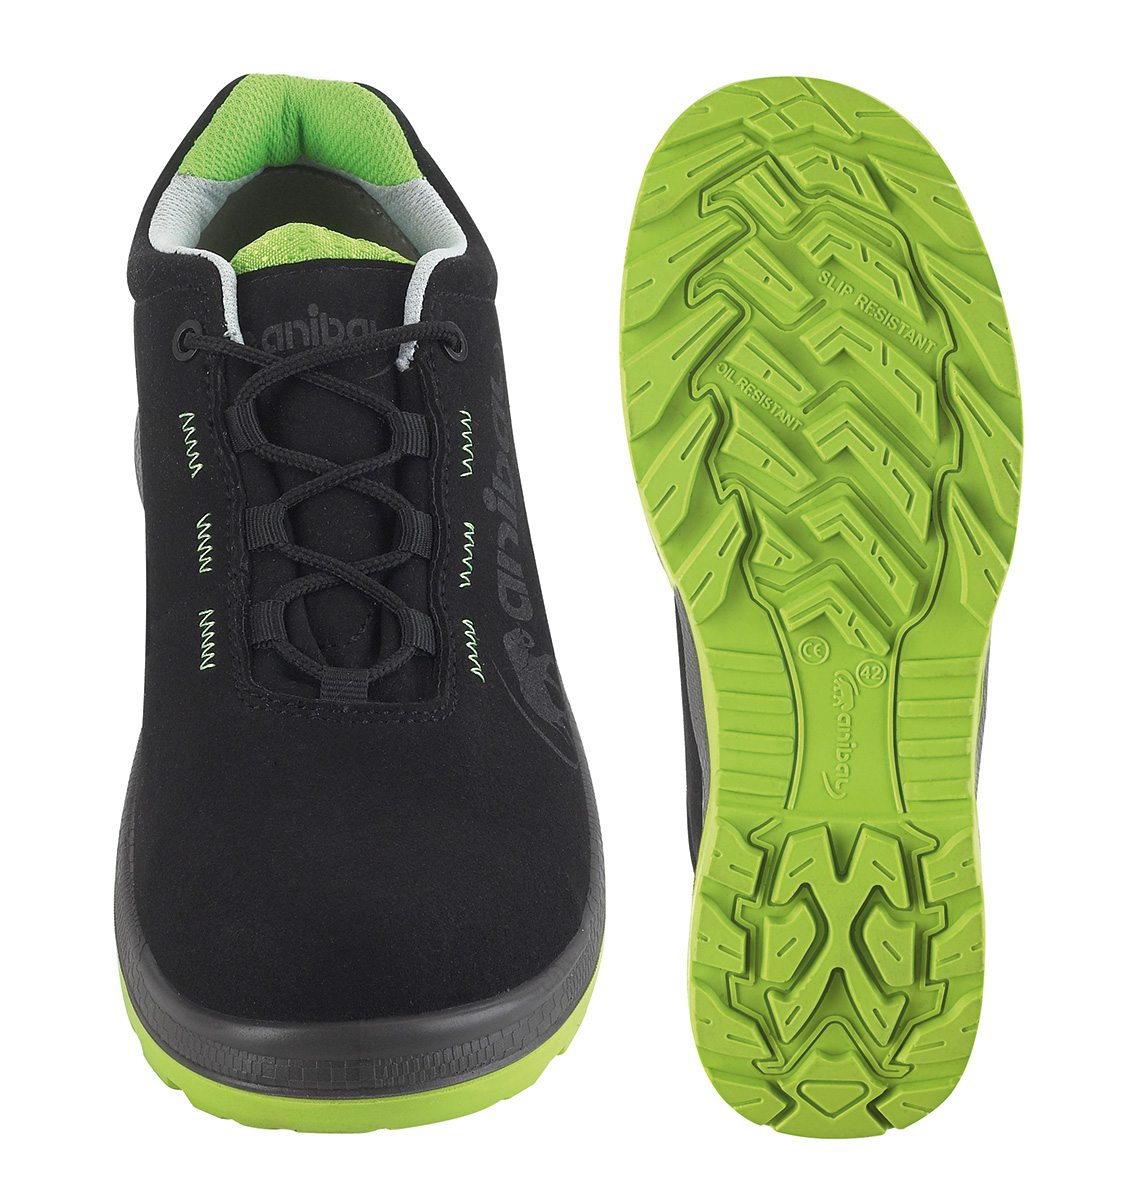 1688-ZUP PRO Calzado de Seguridad Light Evolution  Zapato mod. 